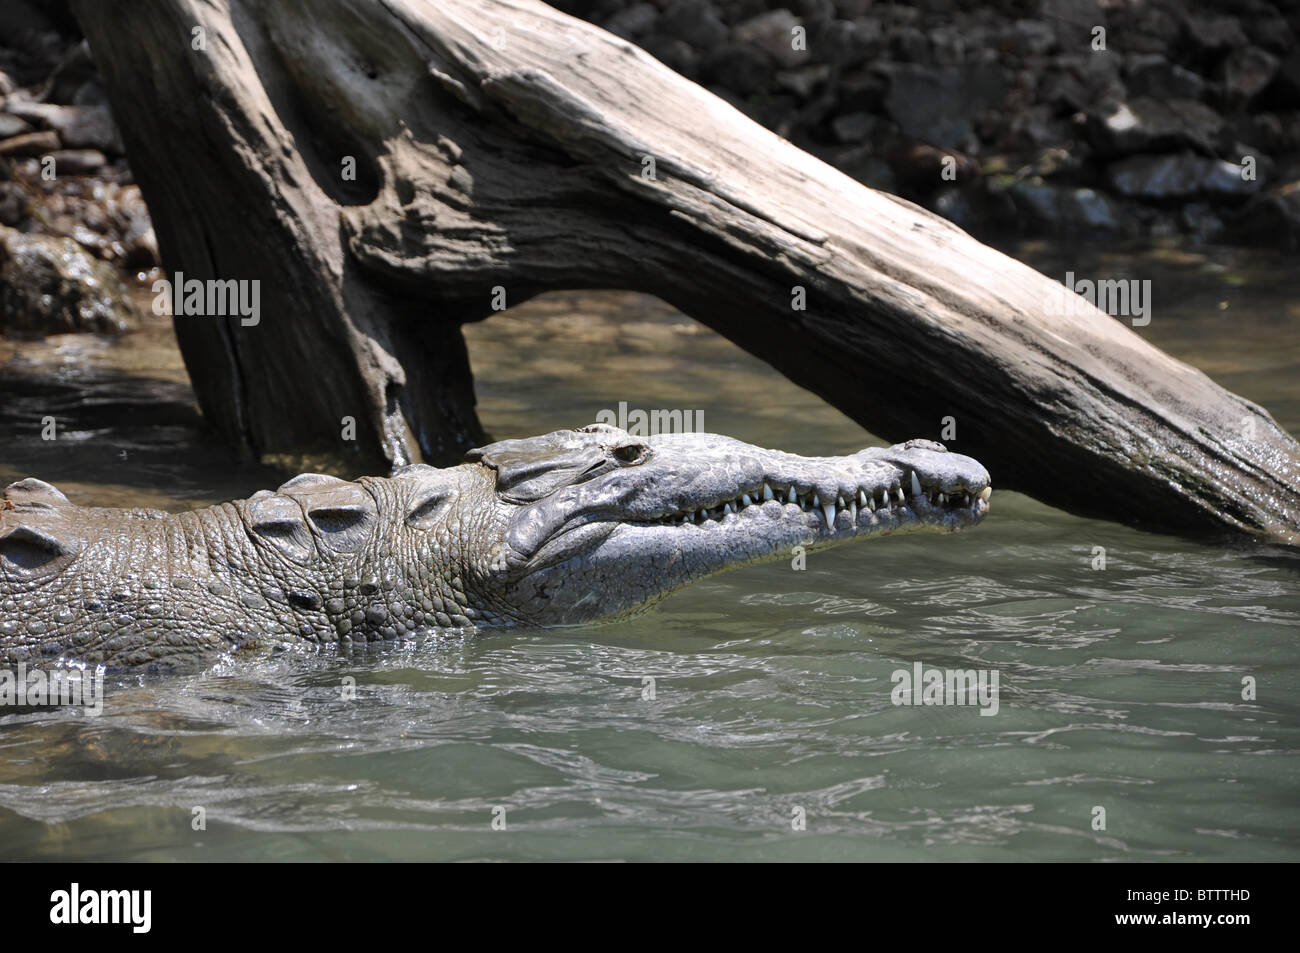 Mexico crocodile Stock Photo